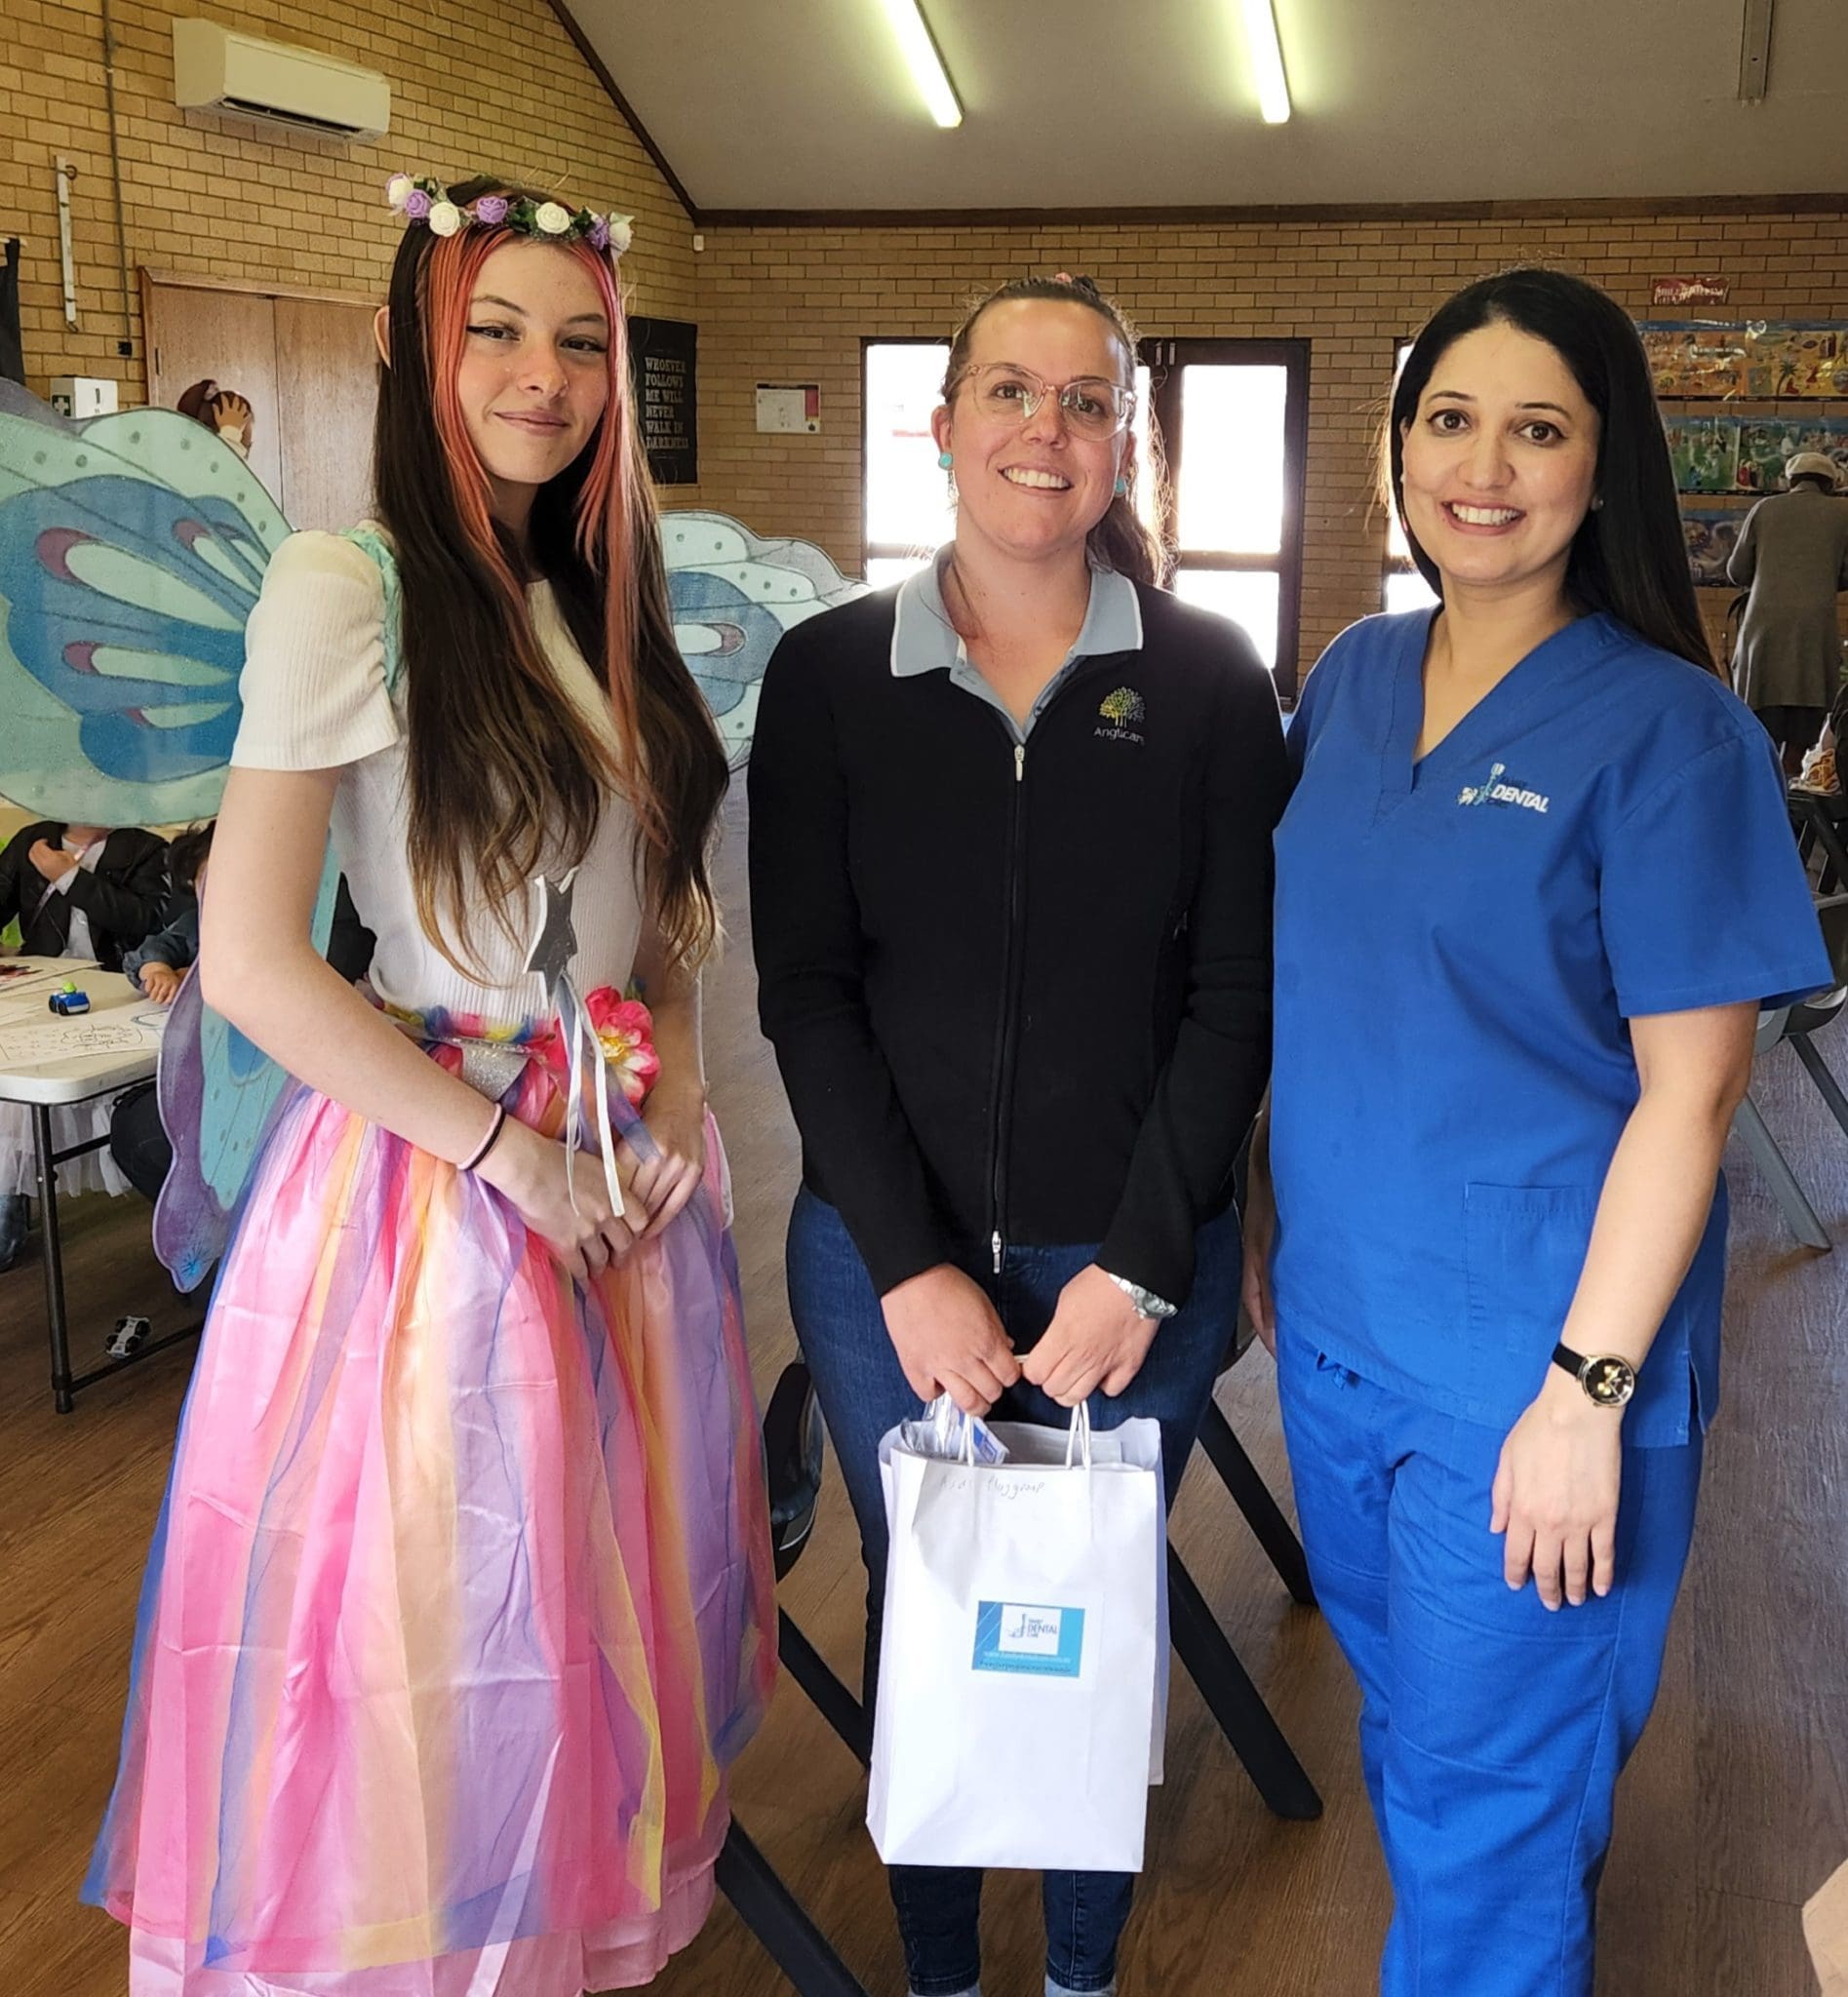 Campbelltown Family Dental Care Airds Playgroup Dental Health Week visit 1.j